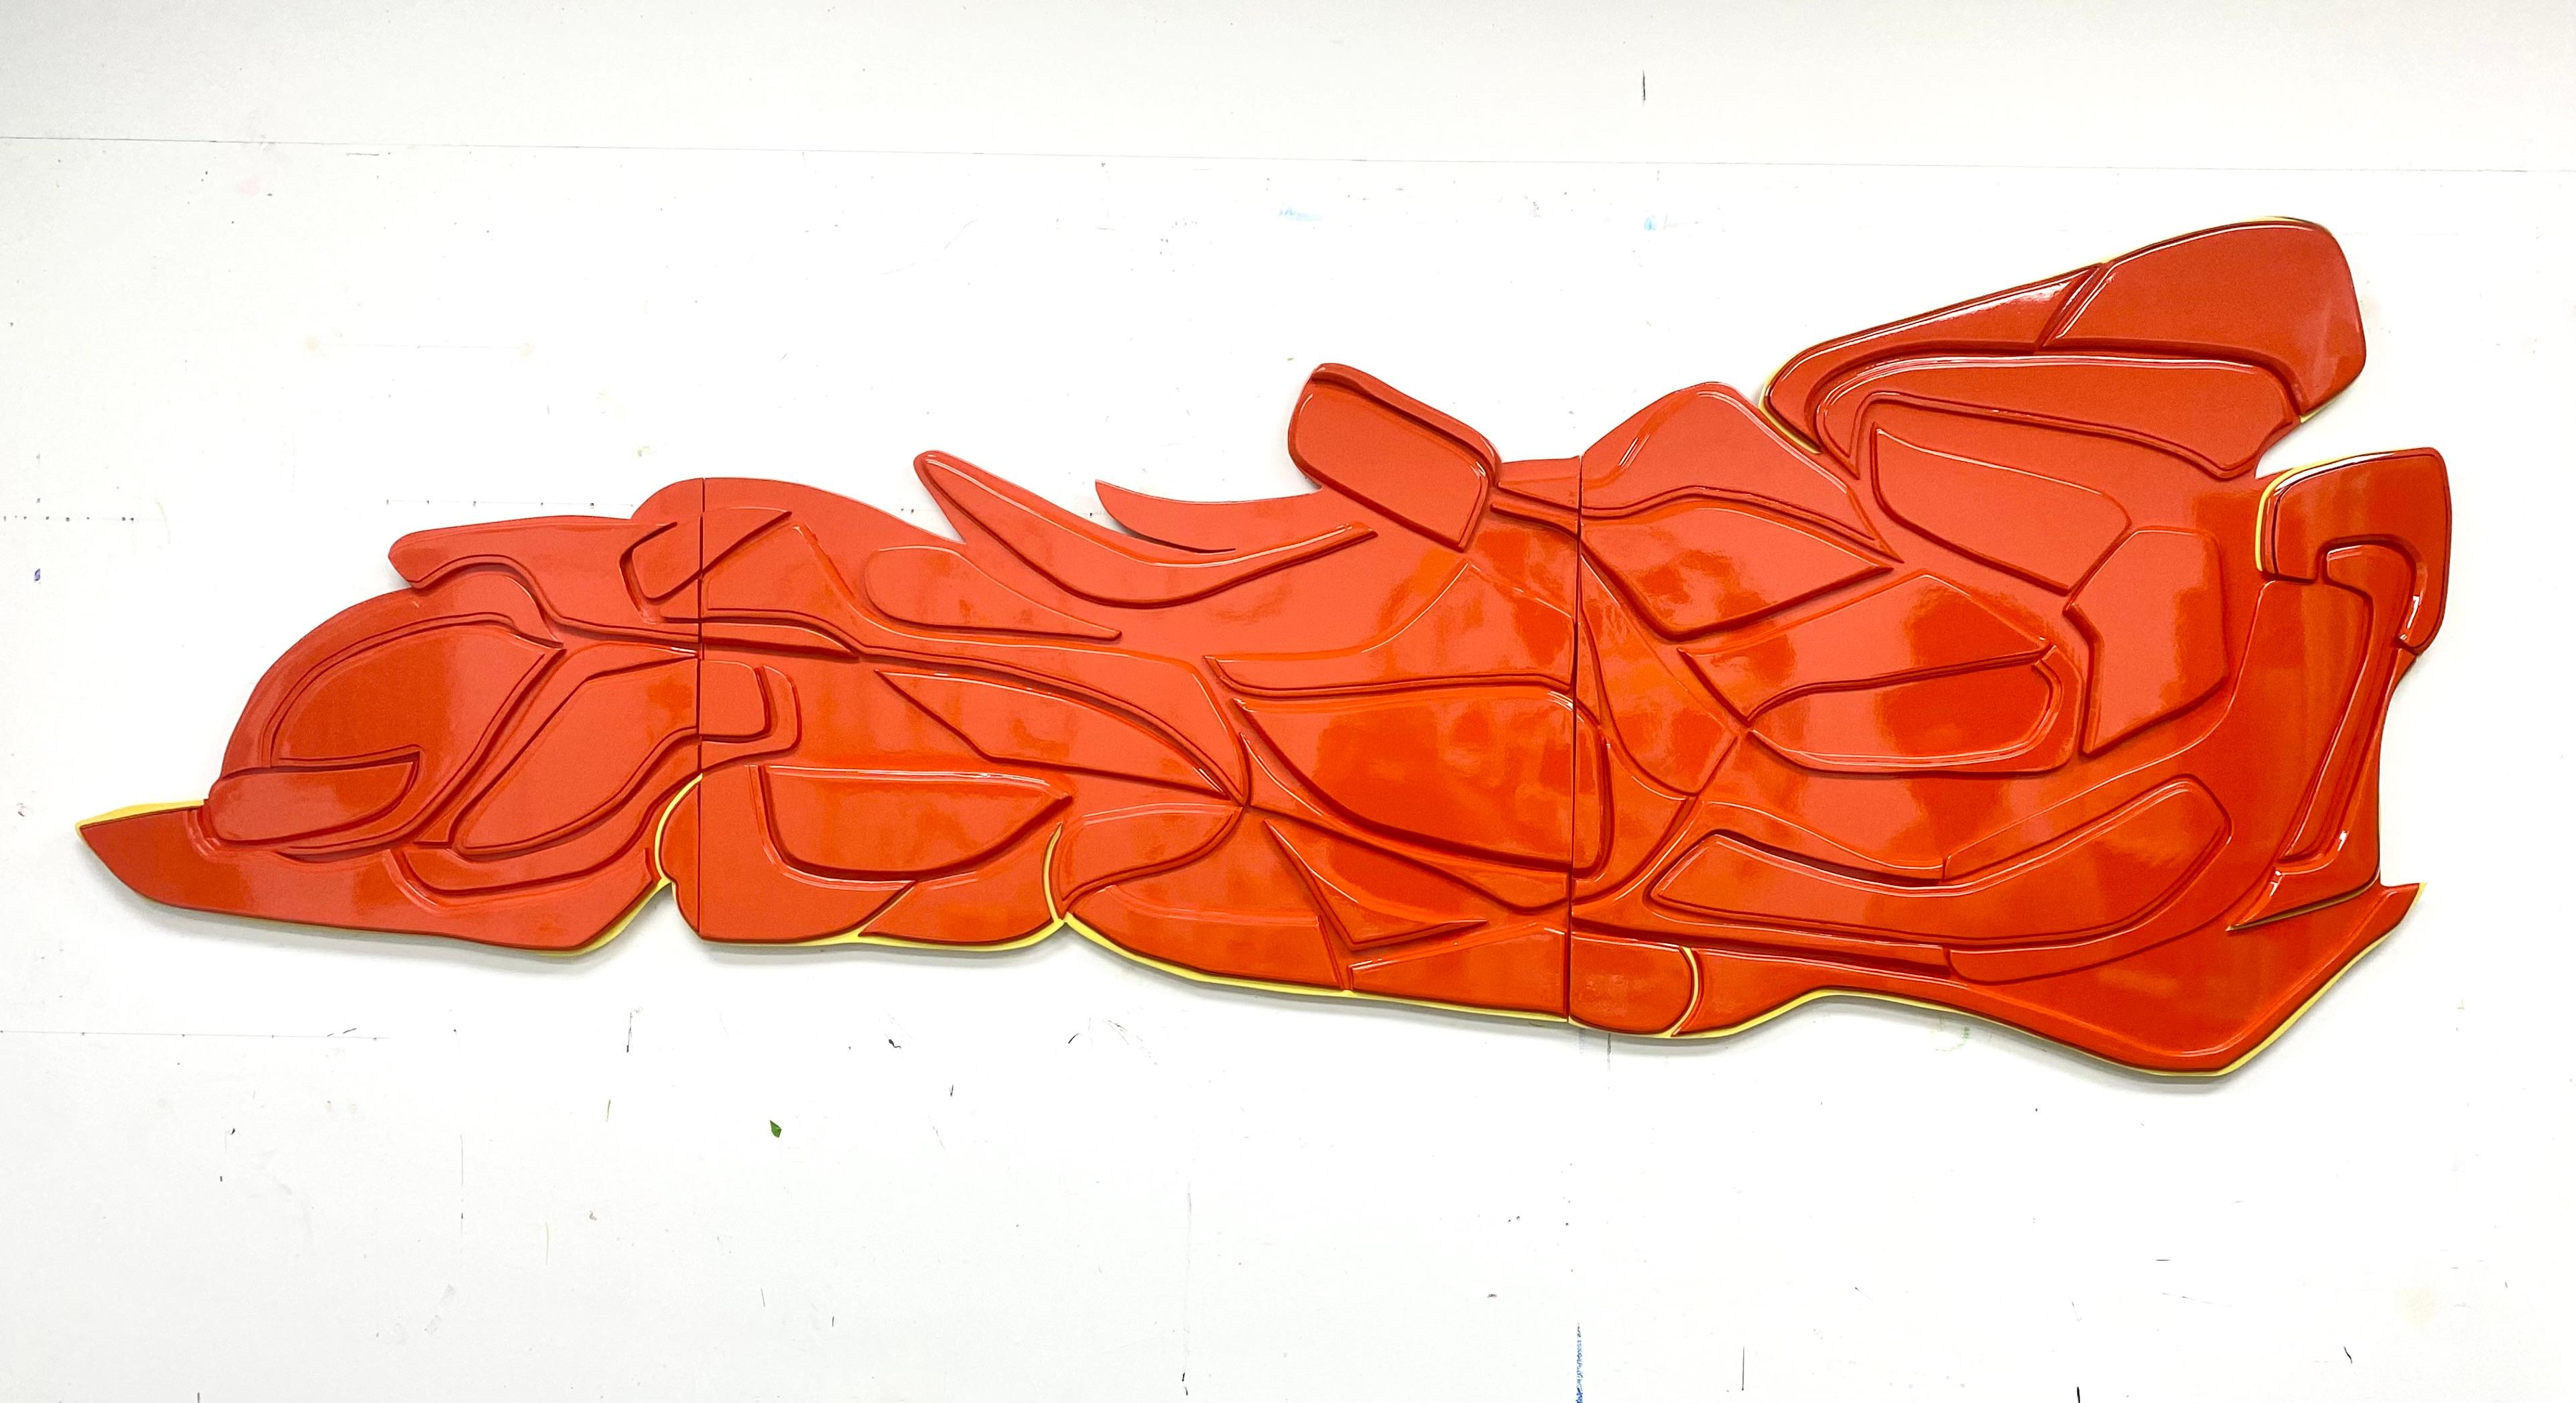 Rick Griggs Abstract Painting - "Fire Bird", 70's Orange Firebird Car Paint on MDF, Wall Sculpture, Minimalism